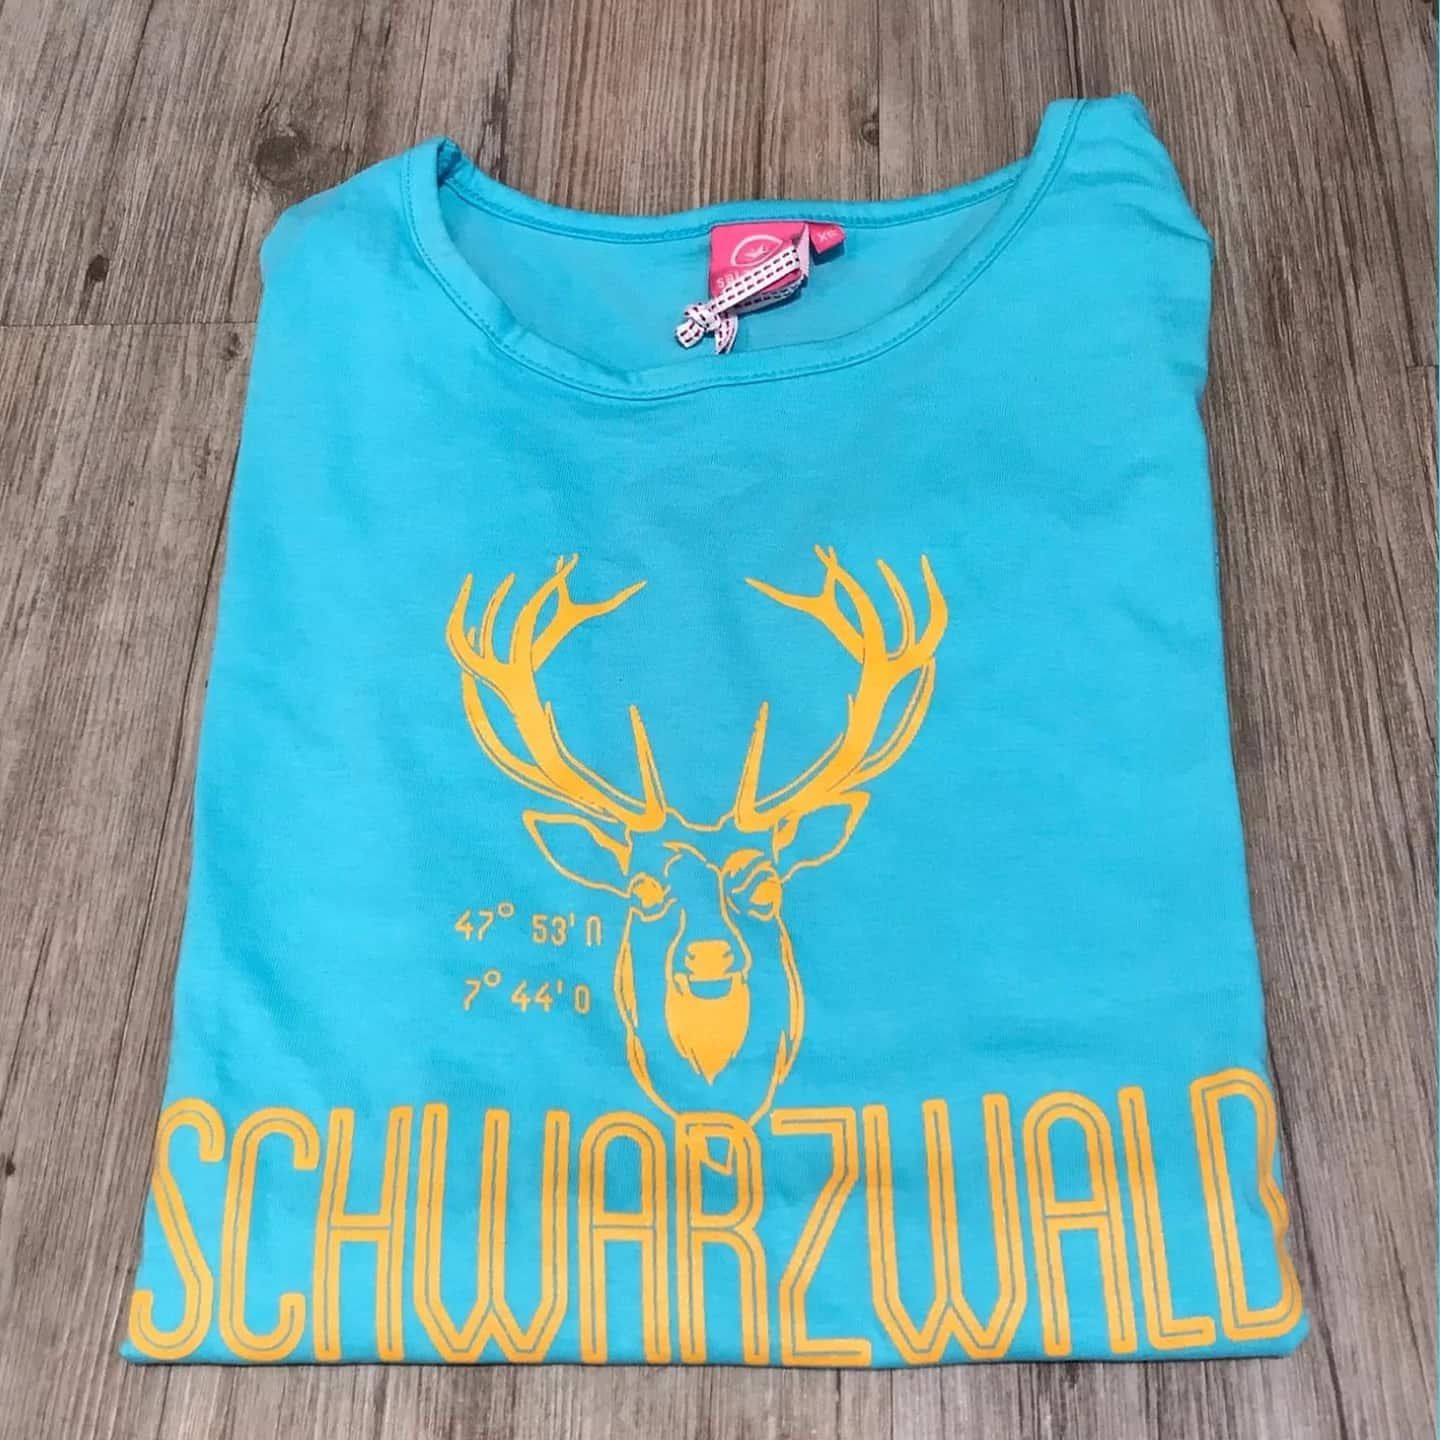 schwarzwald-t-shirt-damen-aquablau-neongelb-1440x1440